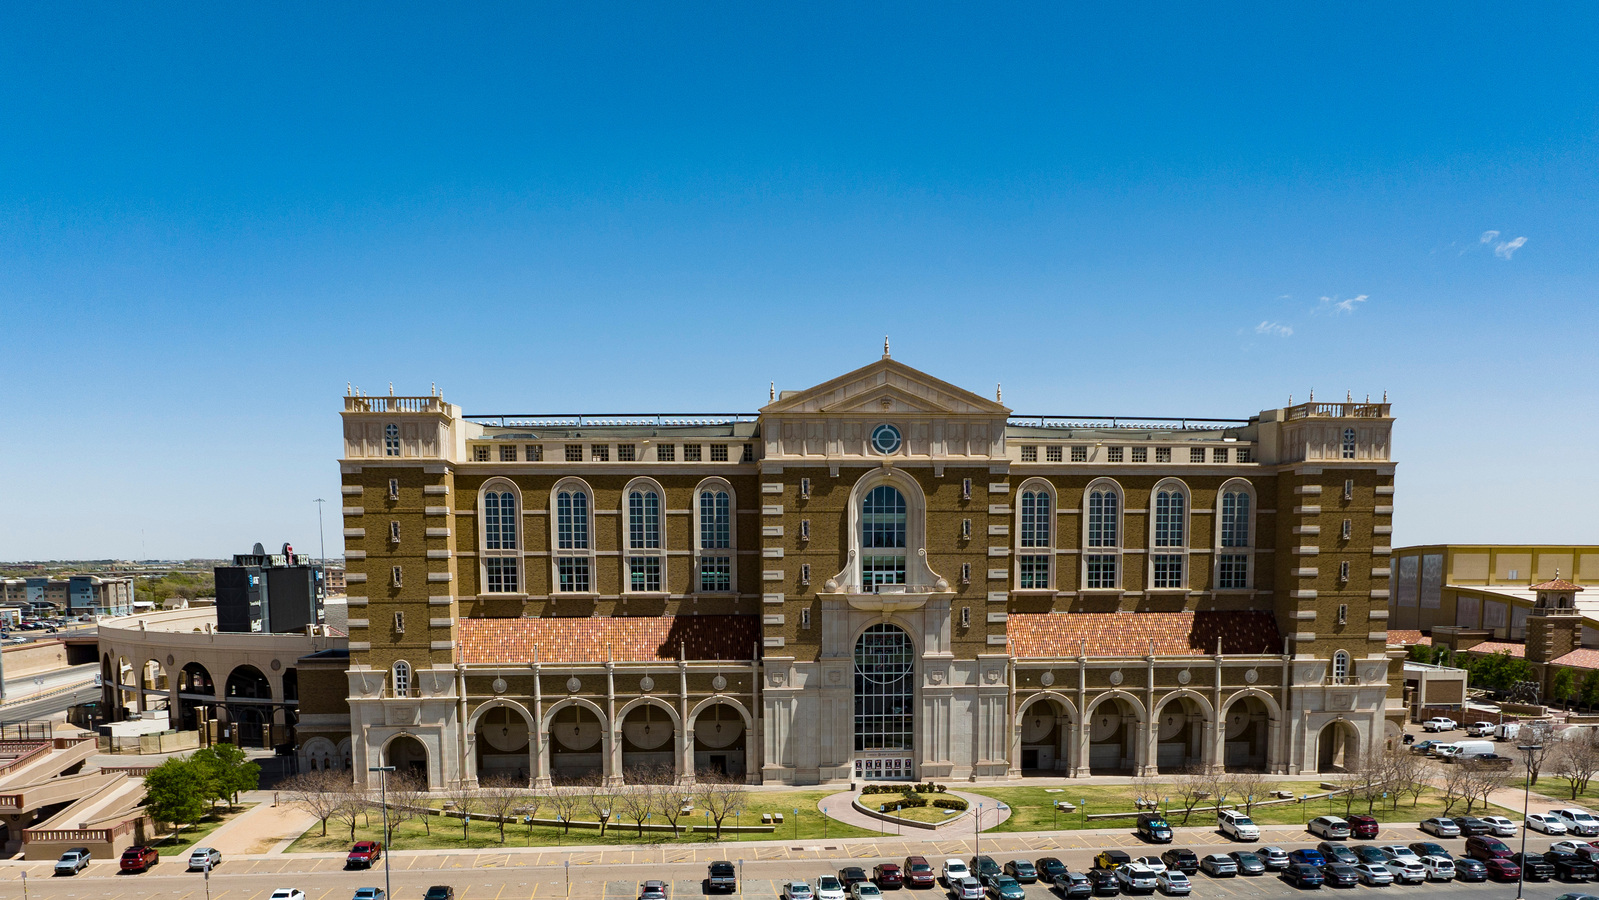 A photo of Texas Tech University's Jones Stadium, home of the Lubbock, TX Red Raiders.